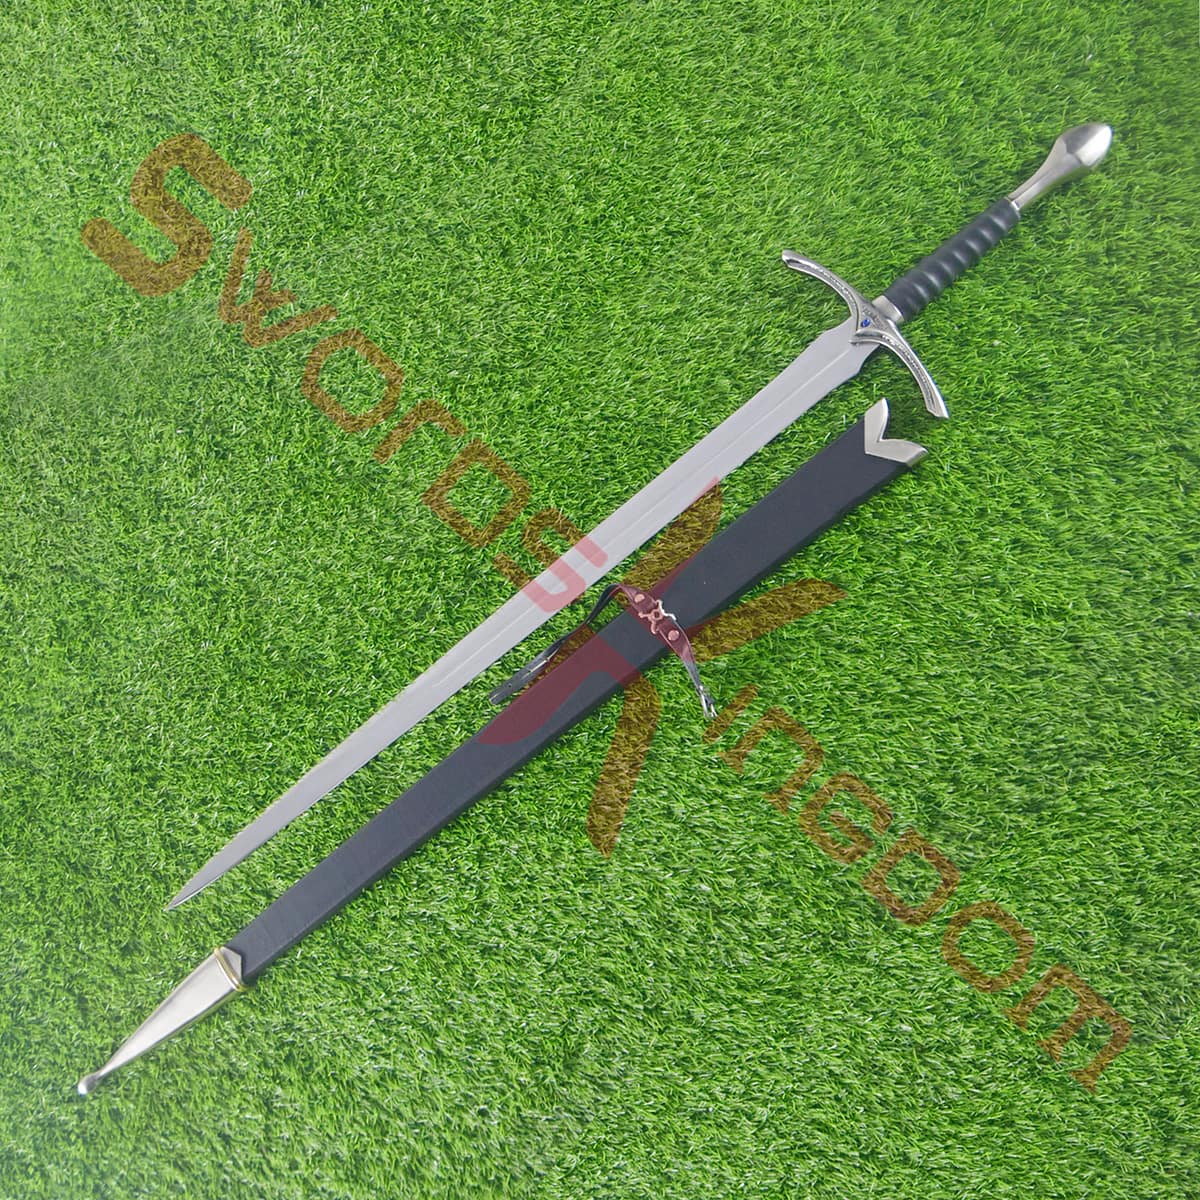 Black Glamdring Sword of Gandalf